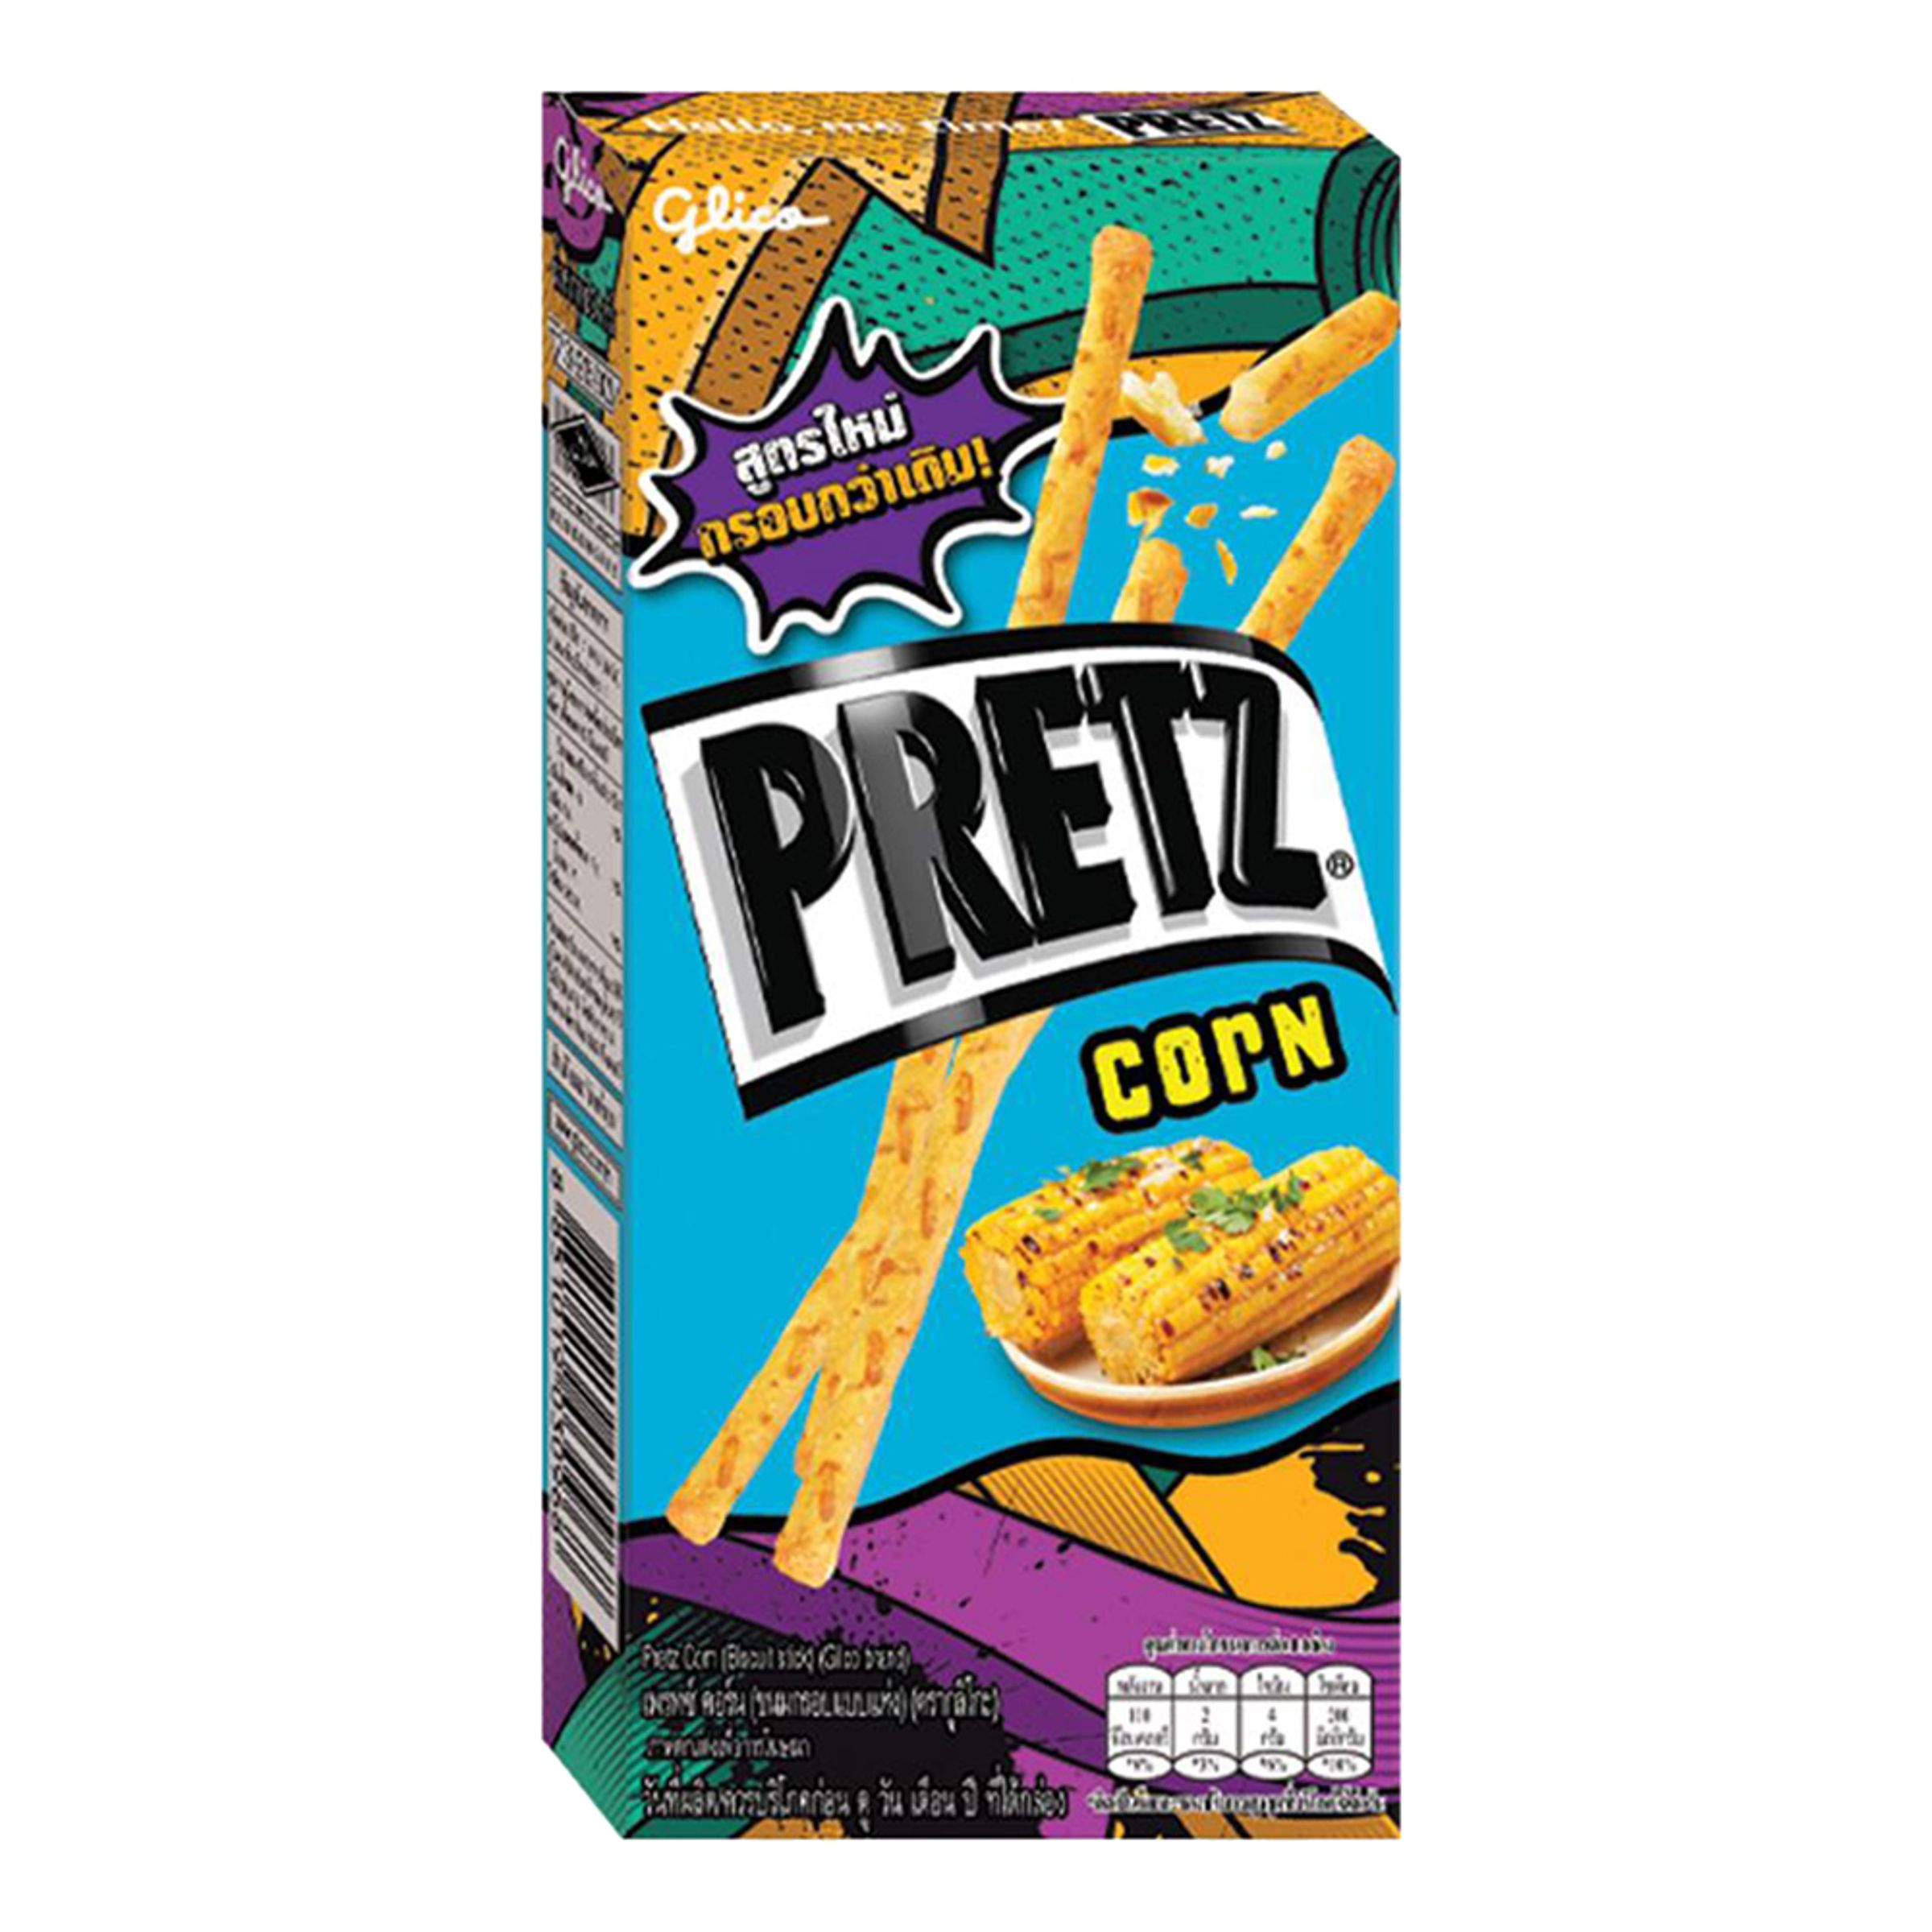 Pretz Corn - 24 gram